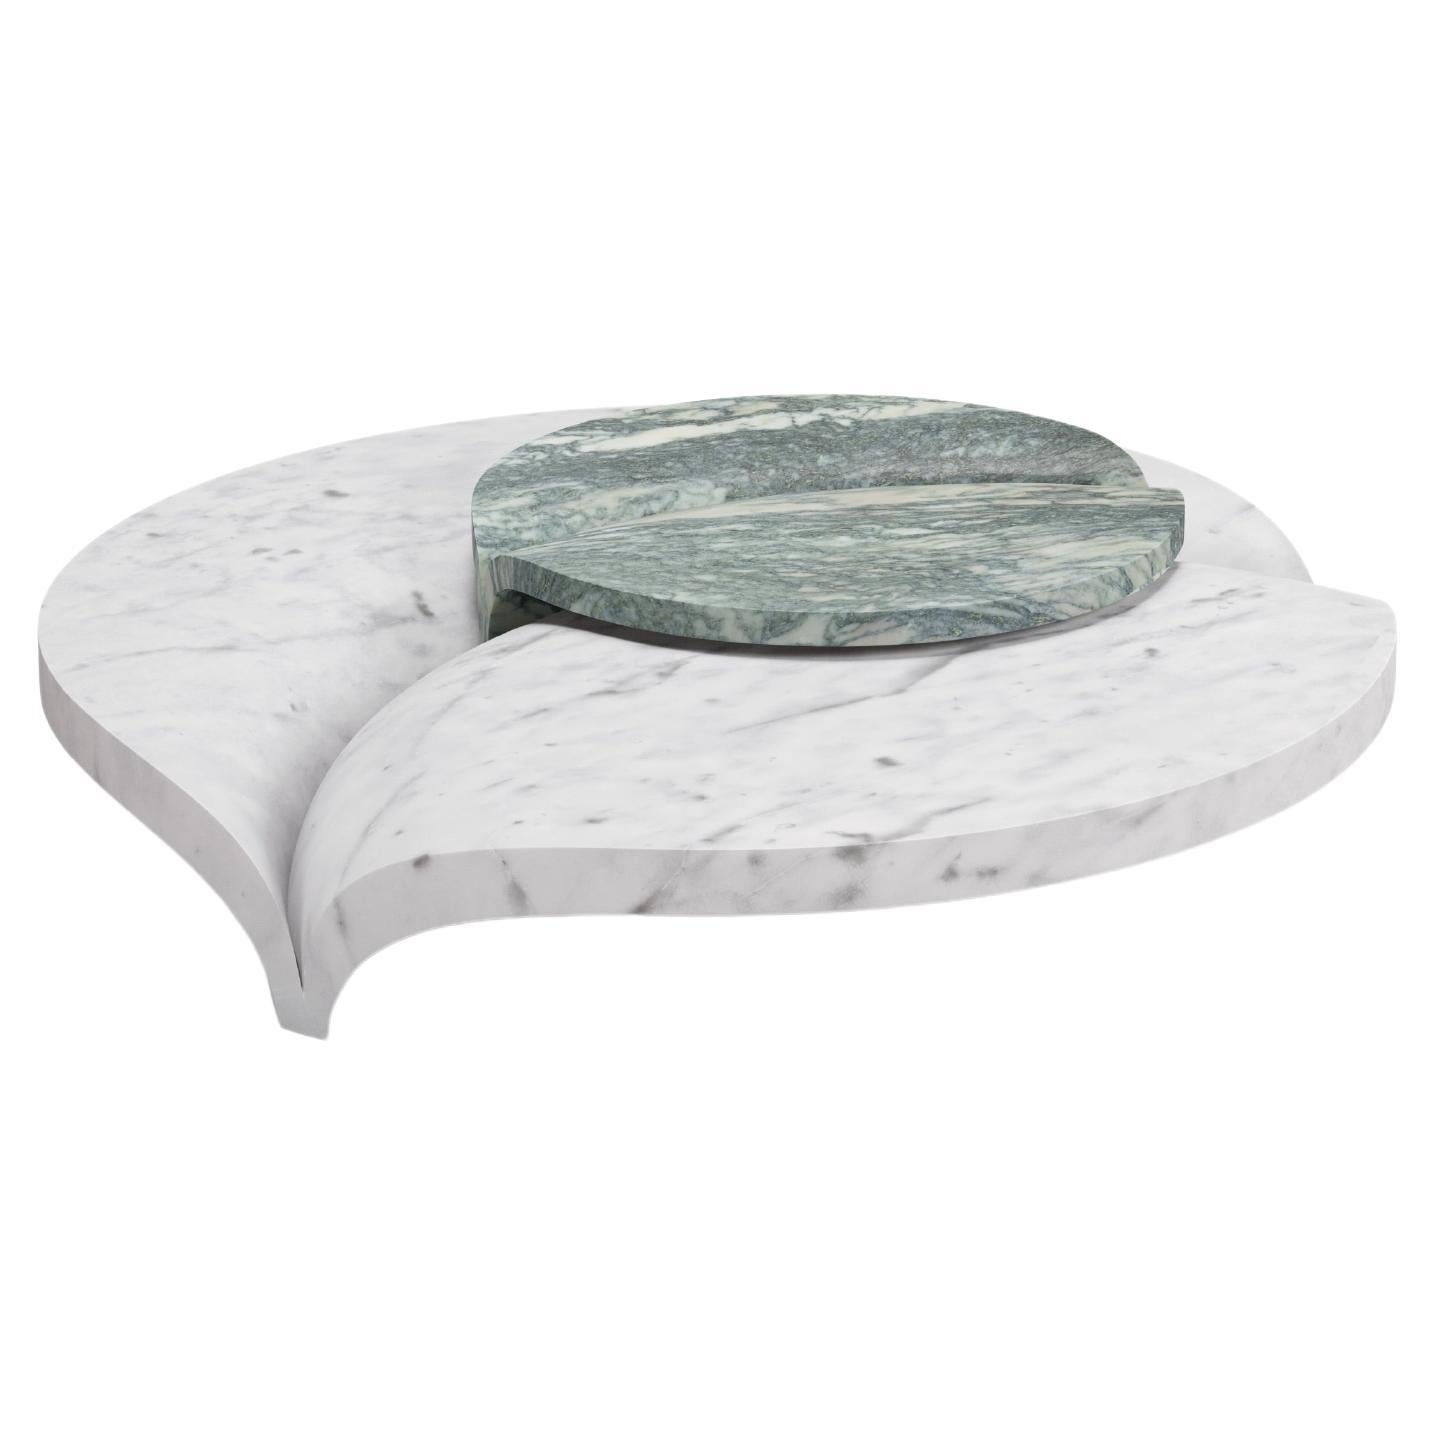 New Modern table in Green and White marble, creator Venelin Kokalov For Sale